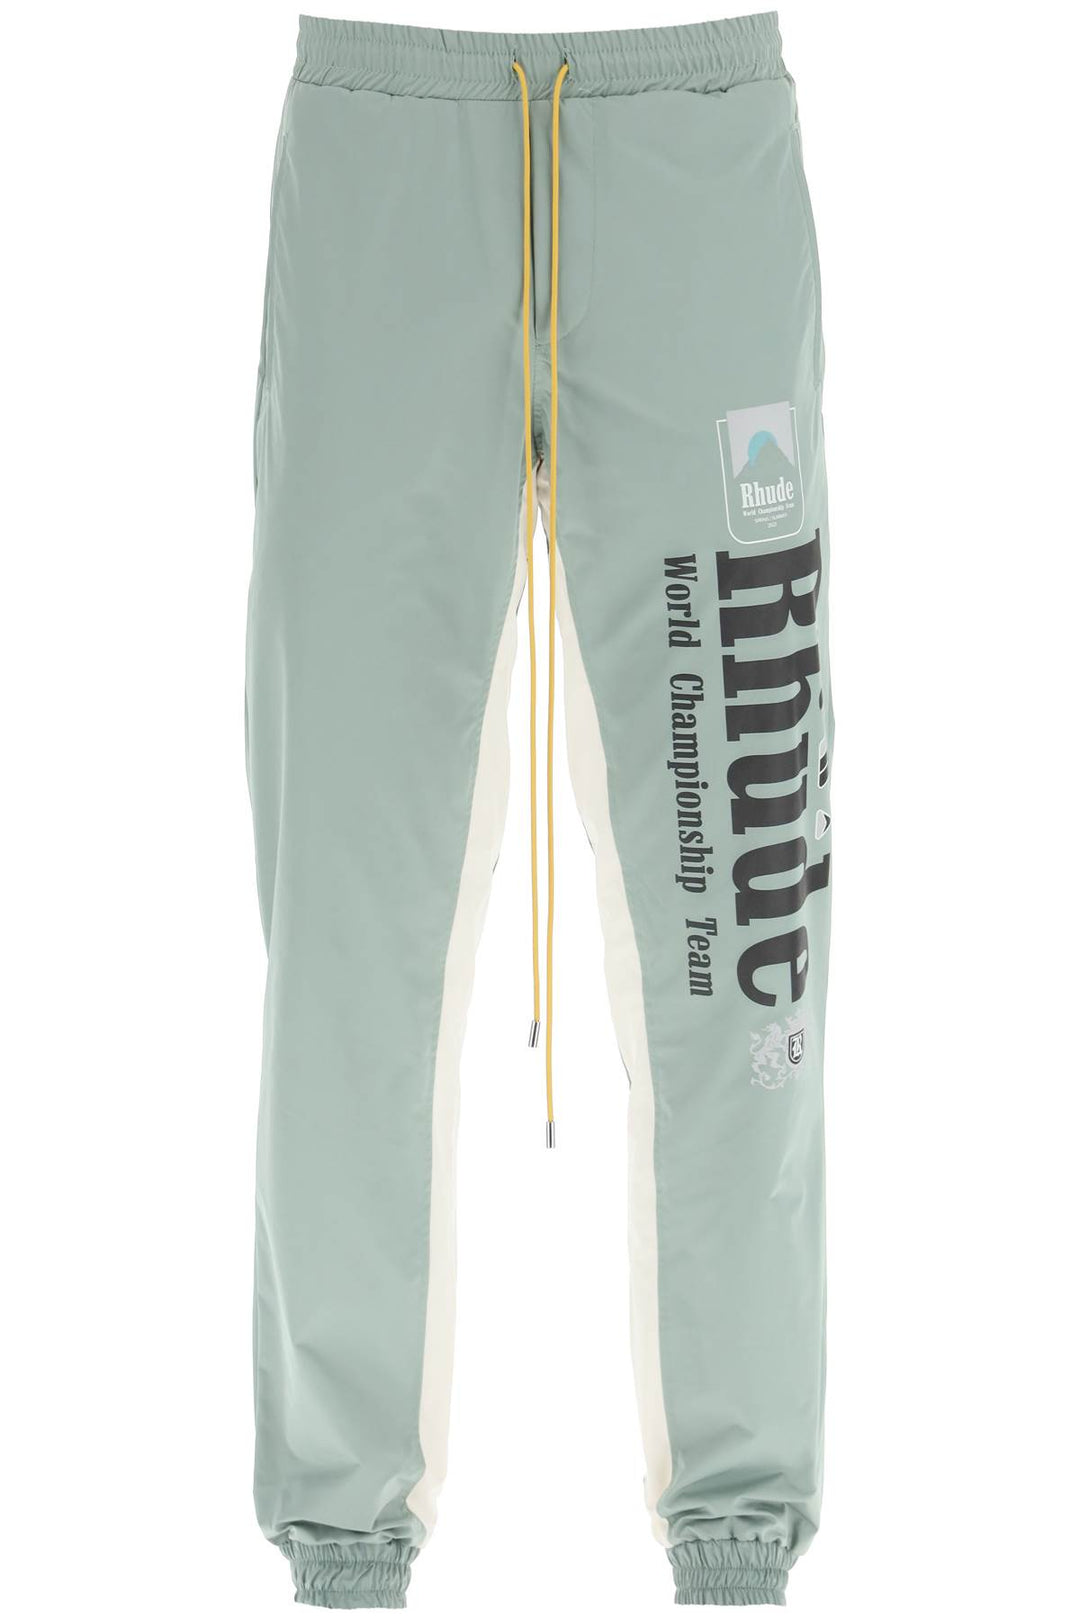 Rhude bicolor 'senna flight' pants-0